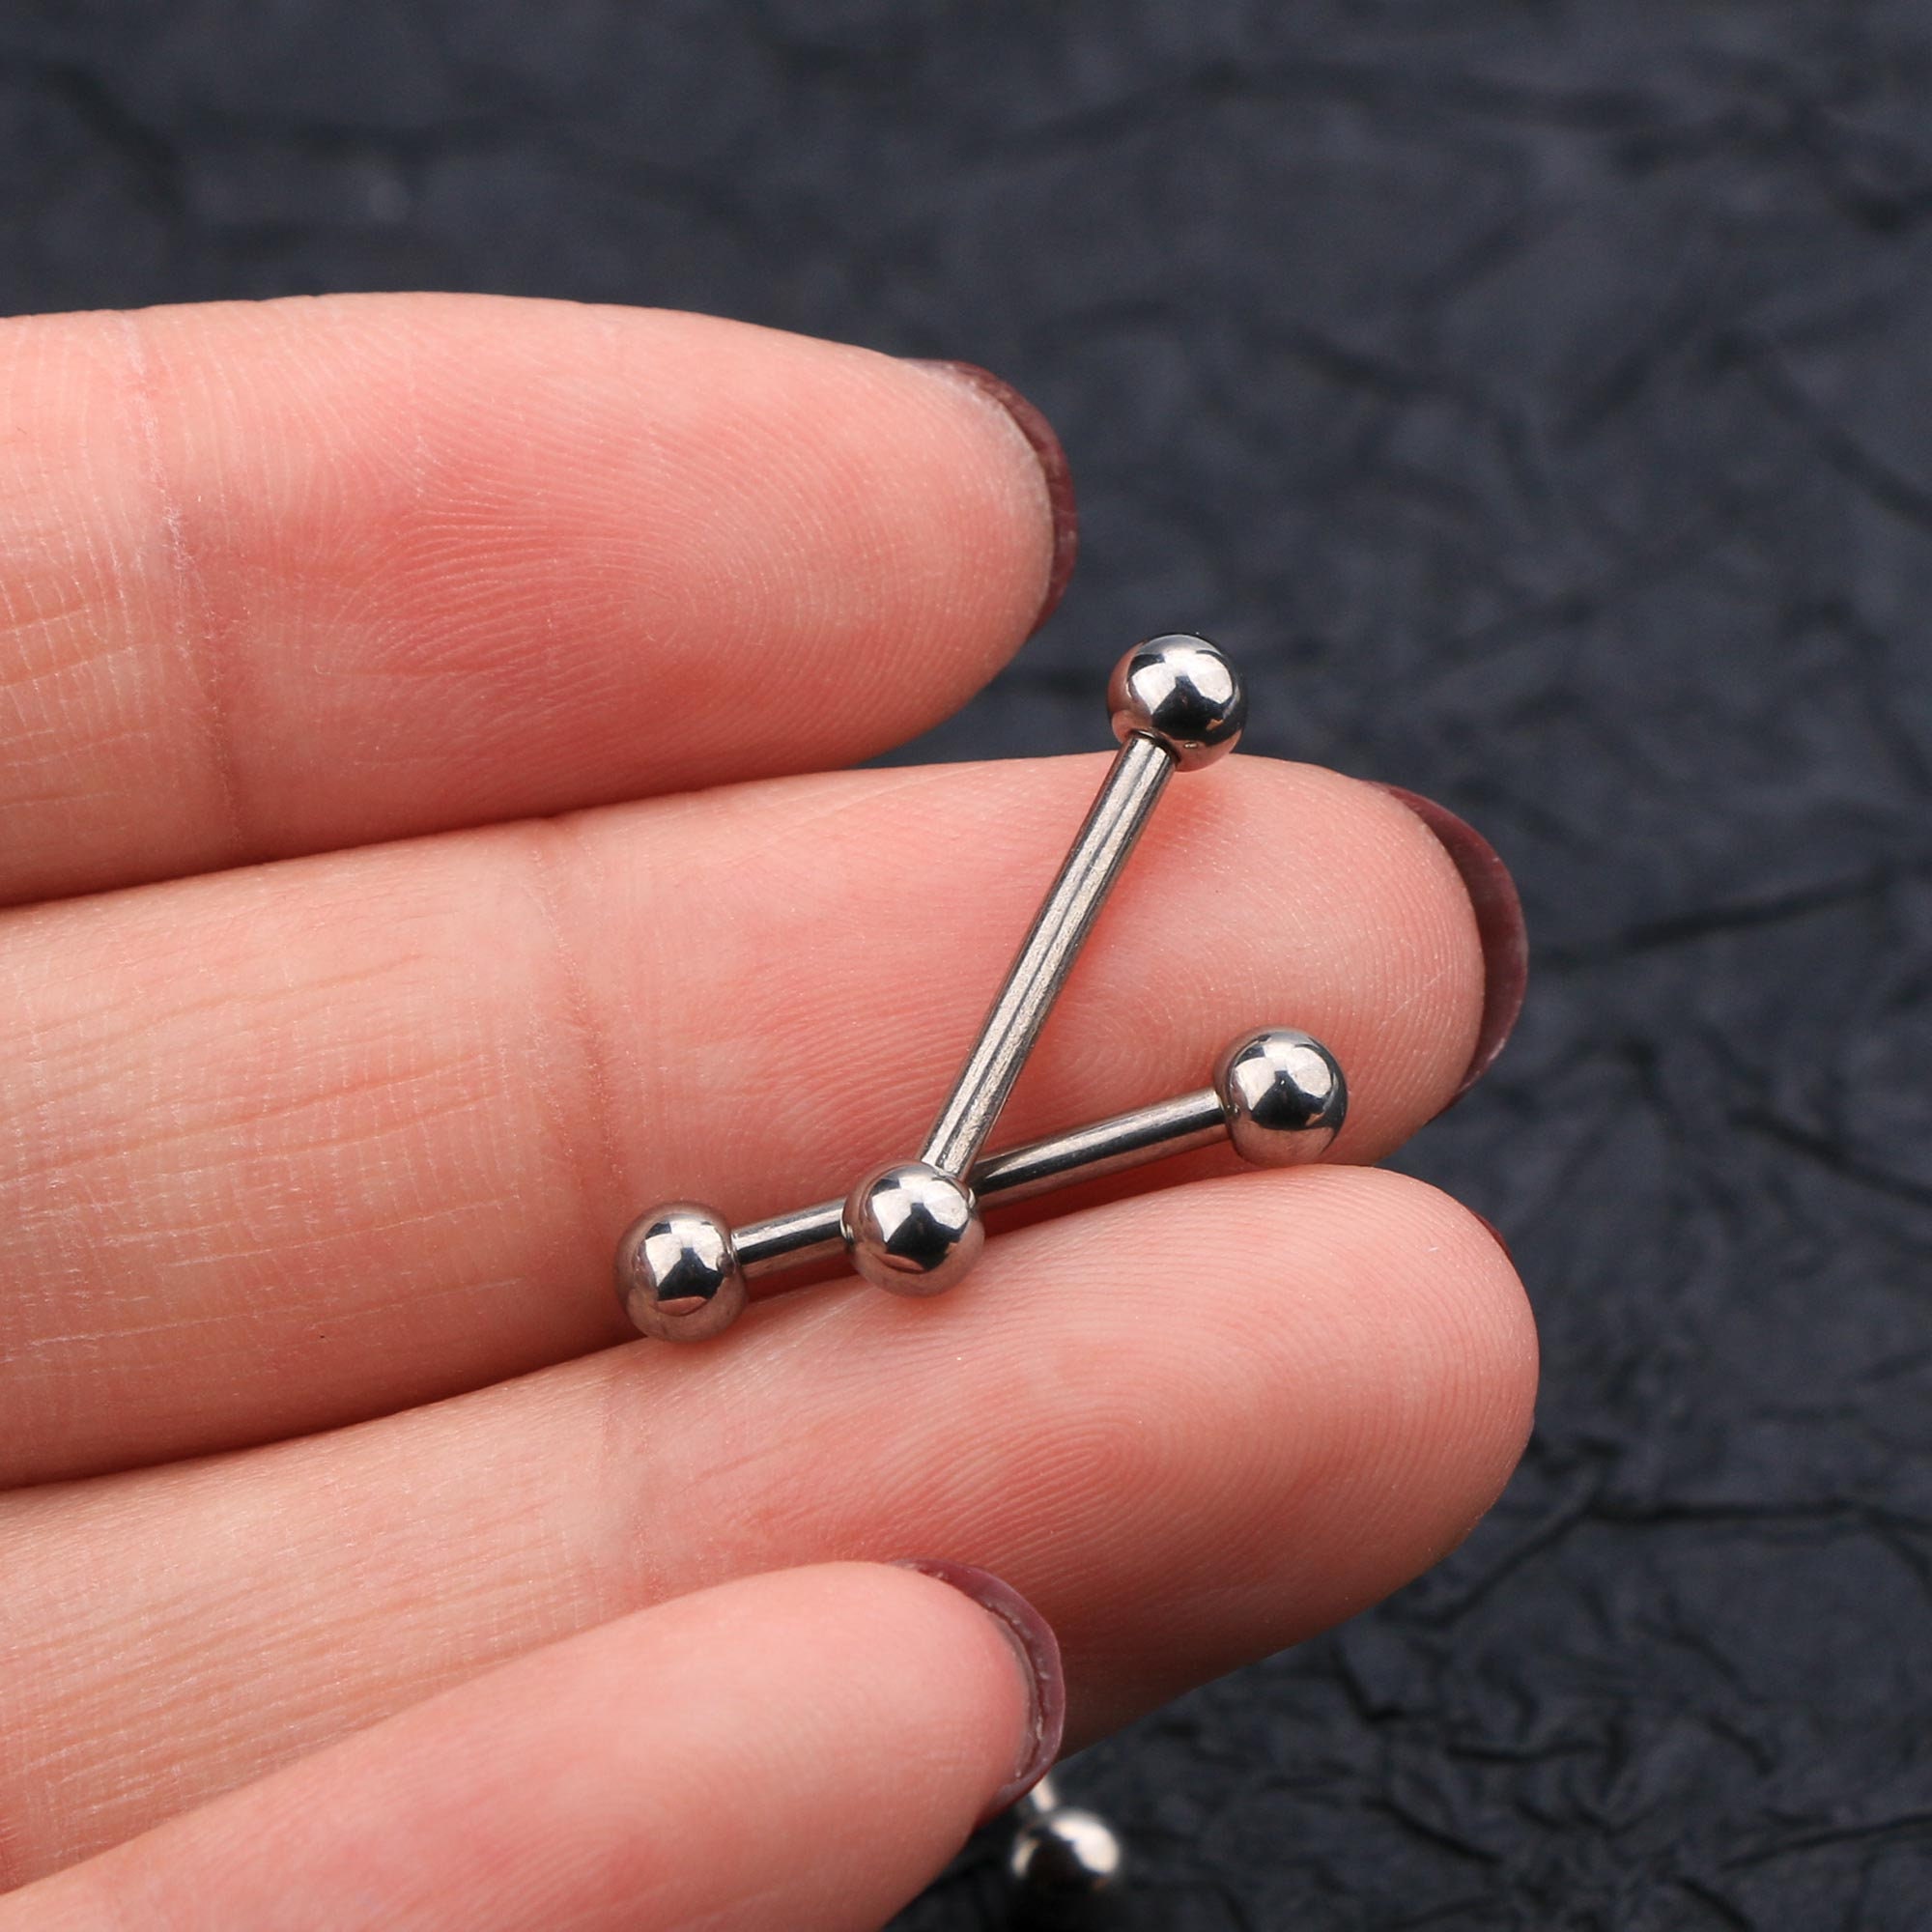 14g Titanium nipple piercing barbell set straight high polish silver i –  Siren Body Jewelry